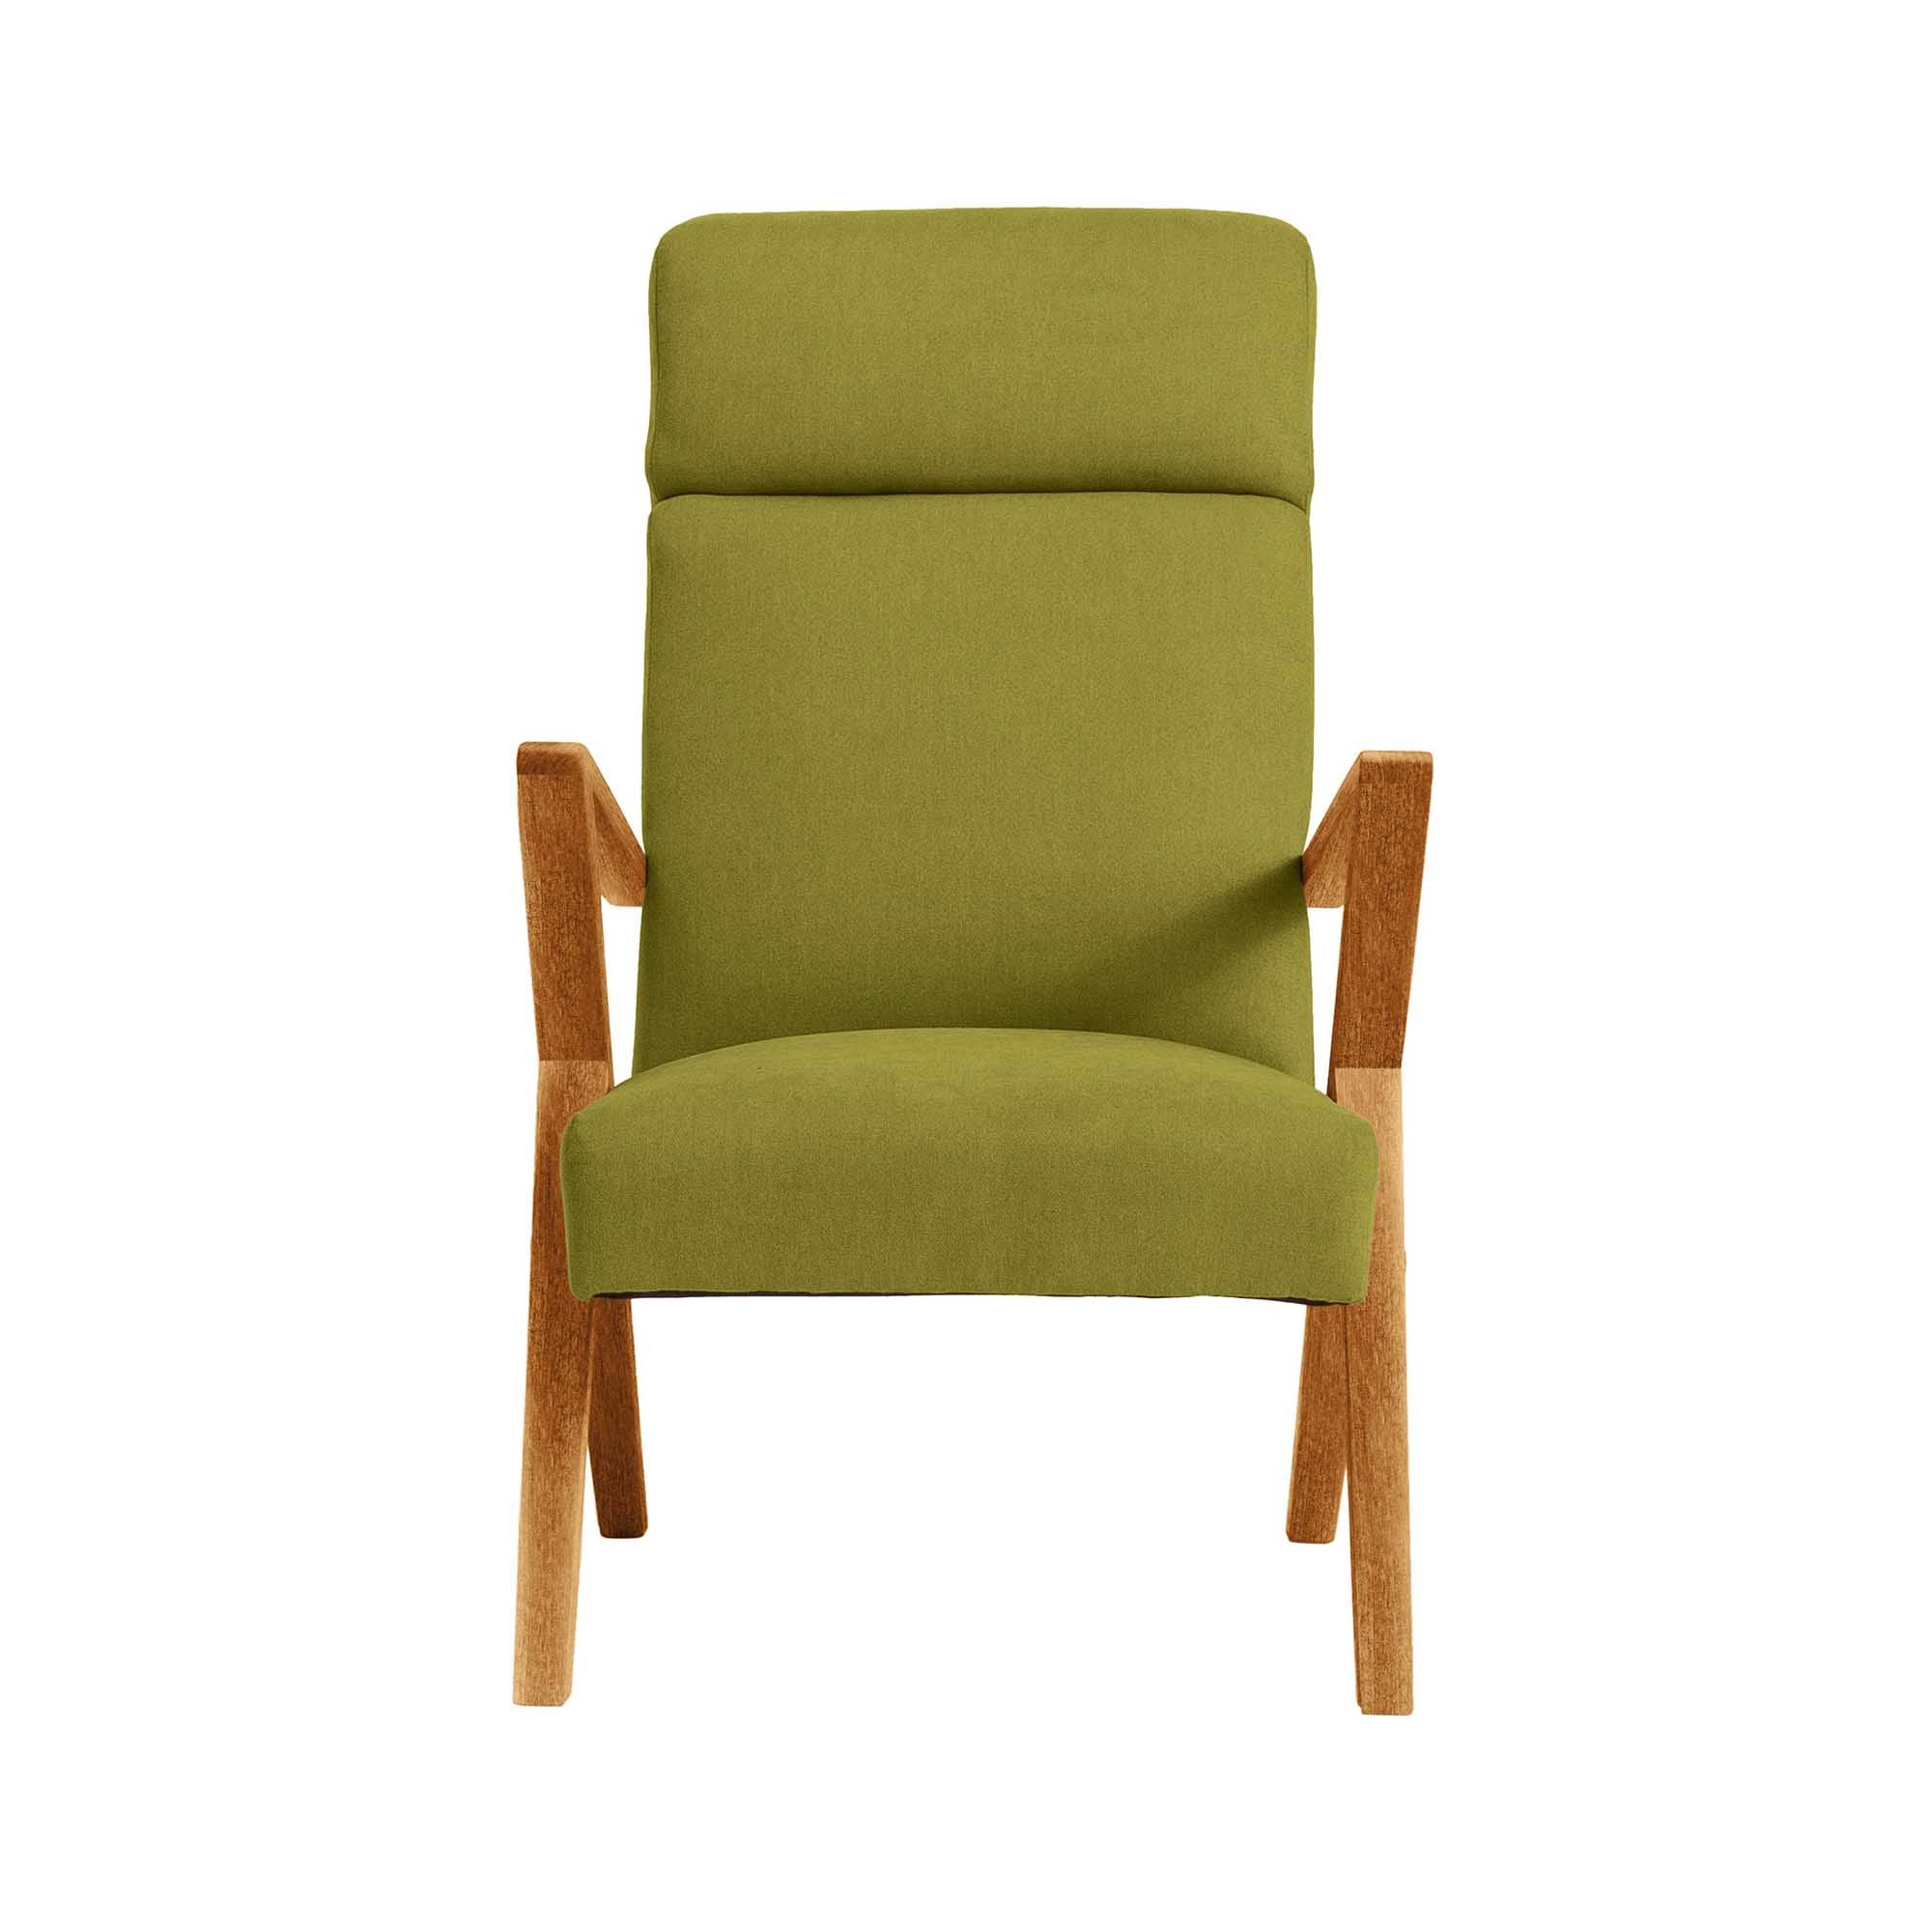 RETROSTAR Lounge Chair, Beech Wood Frame, Oak Colour green fabric, front view